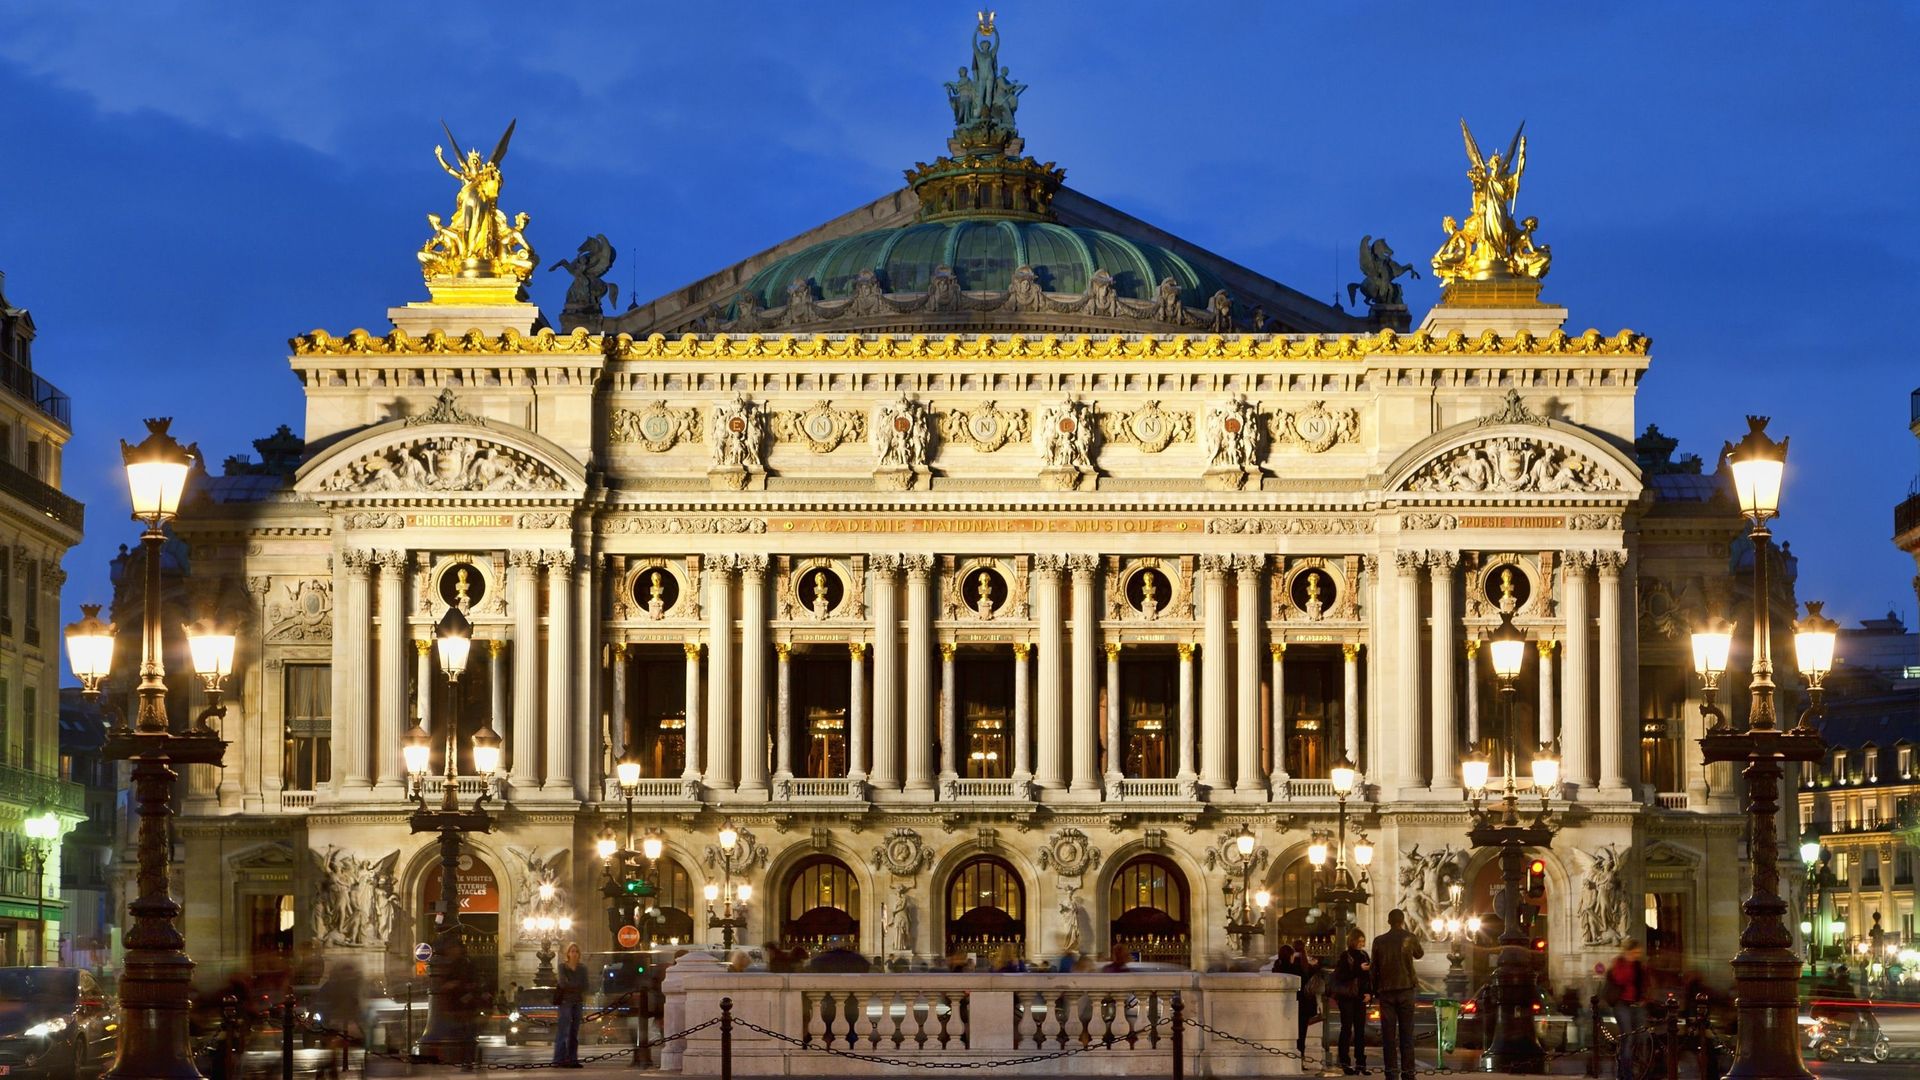 Paris Opera House at night